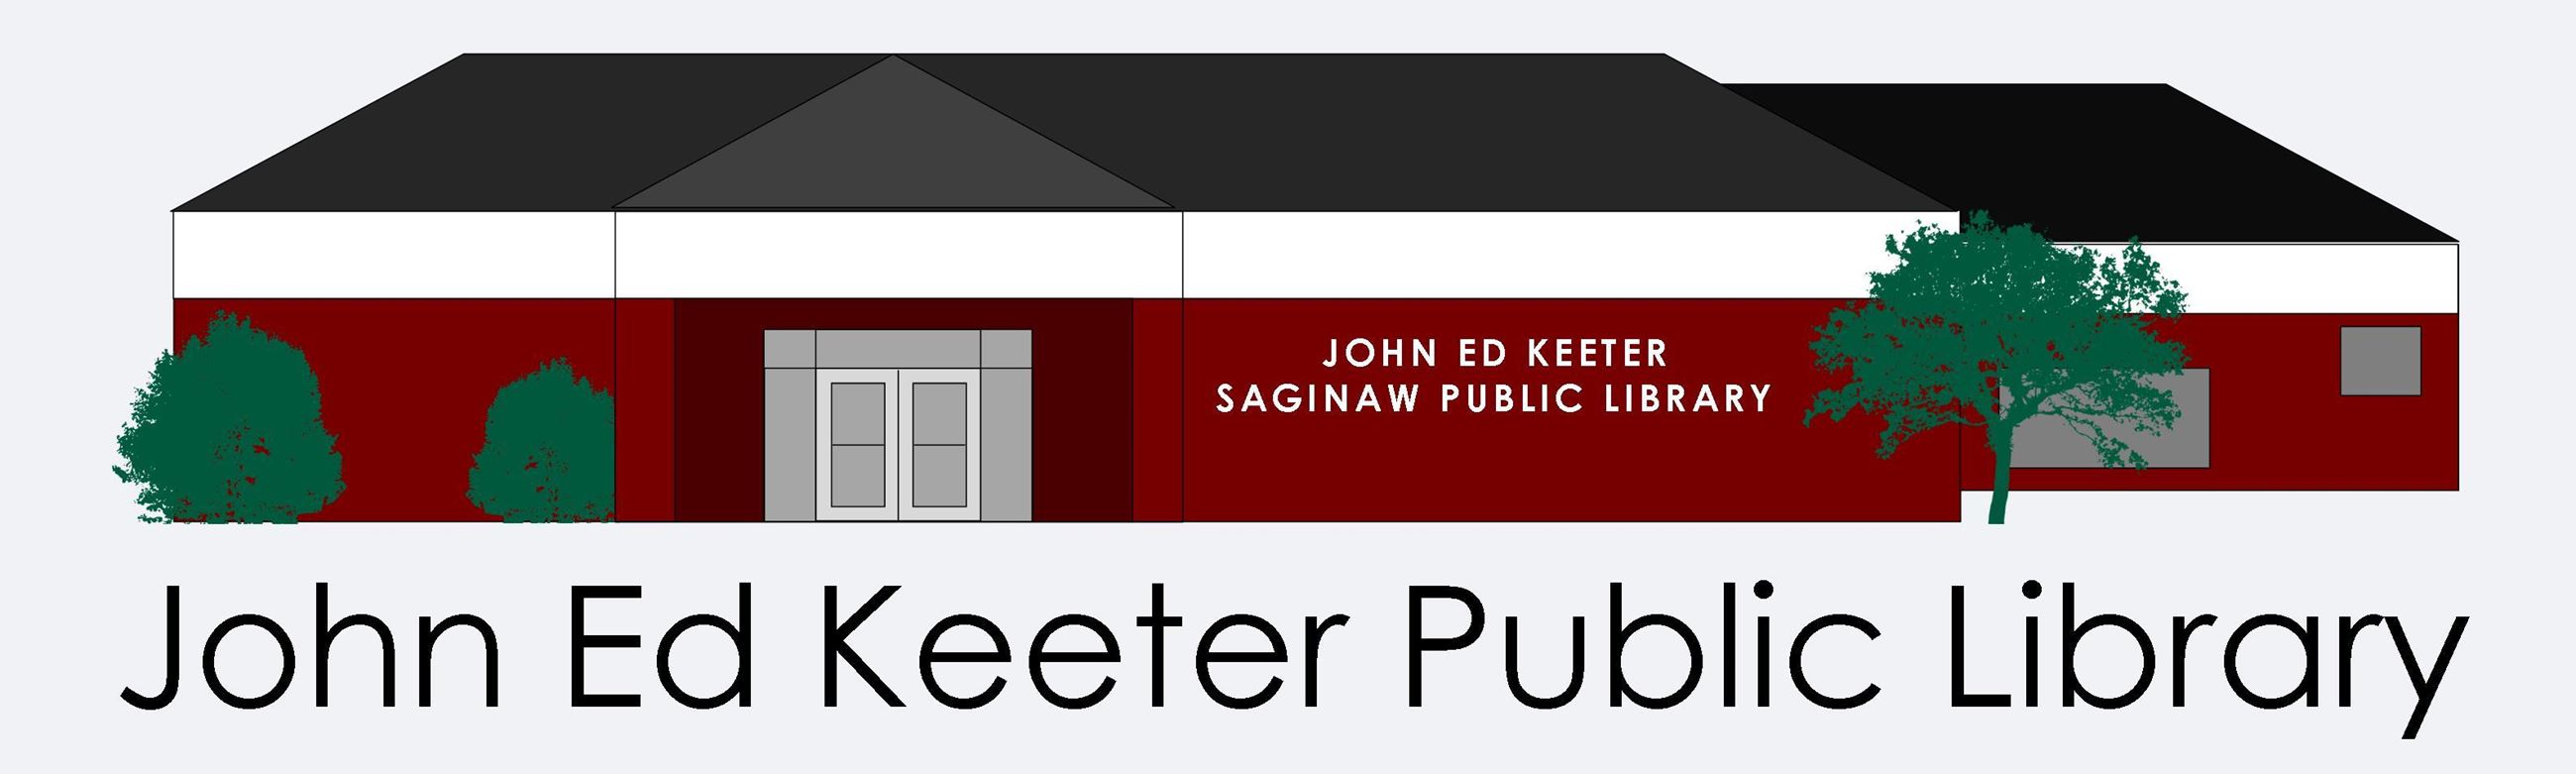 John Ed Keeter Public Library logo